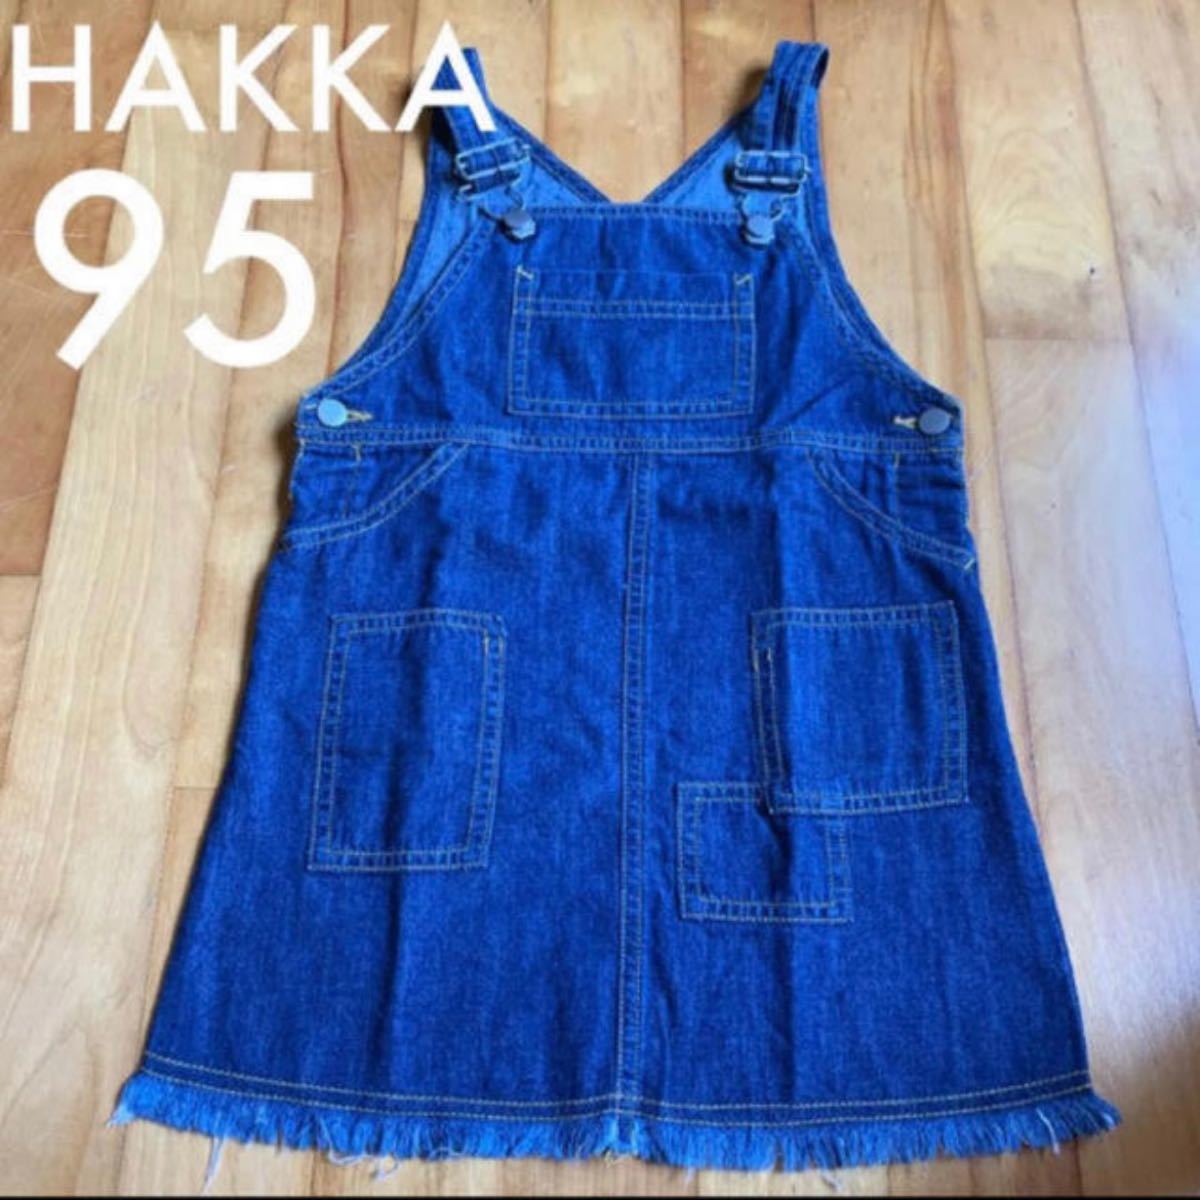 HAKKA ハッカ 95cm ジャンパースカート デニムジャンパースカート デニム スカート ワンピース 子供服 子ども服 キッズ